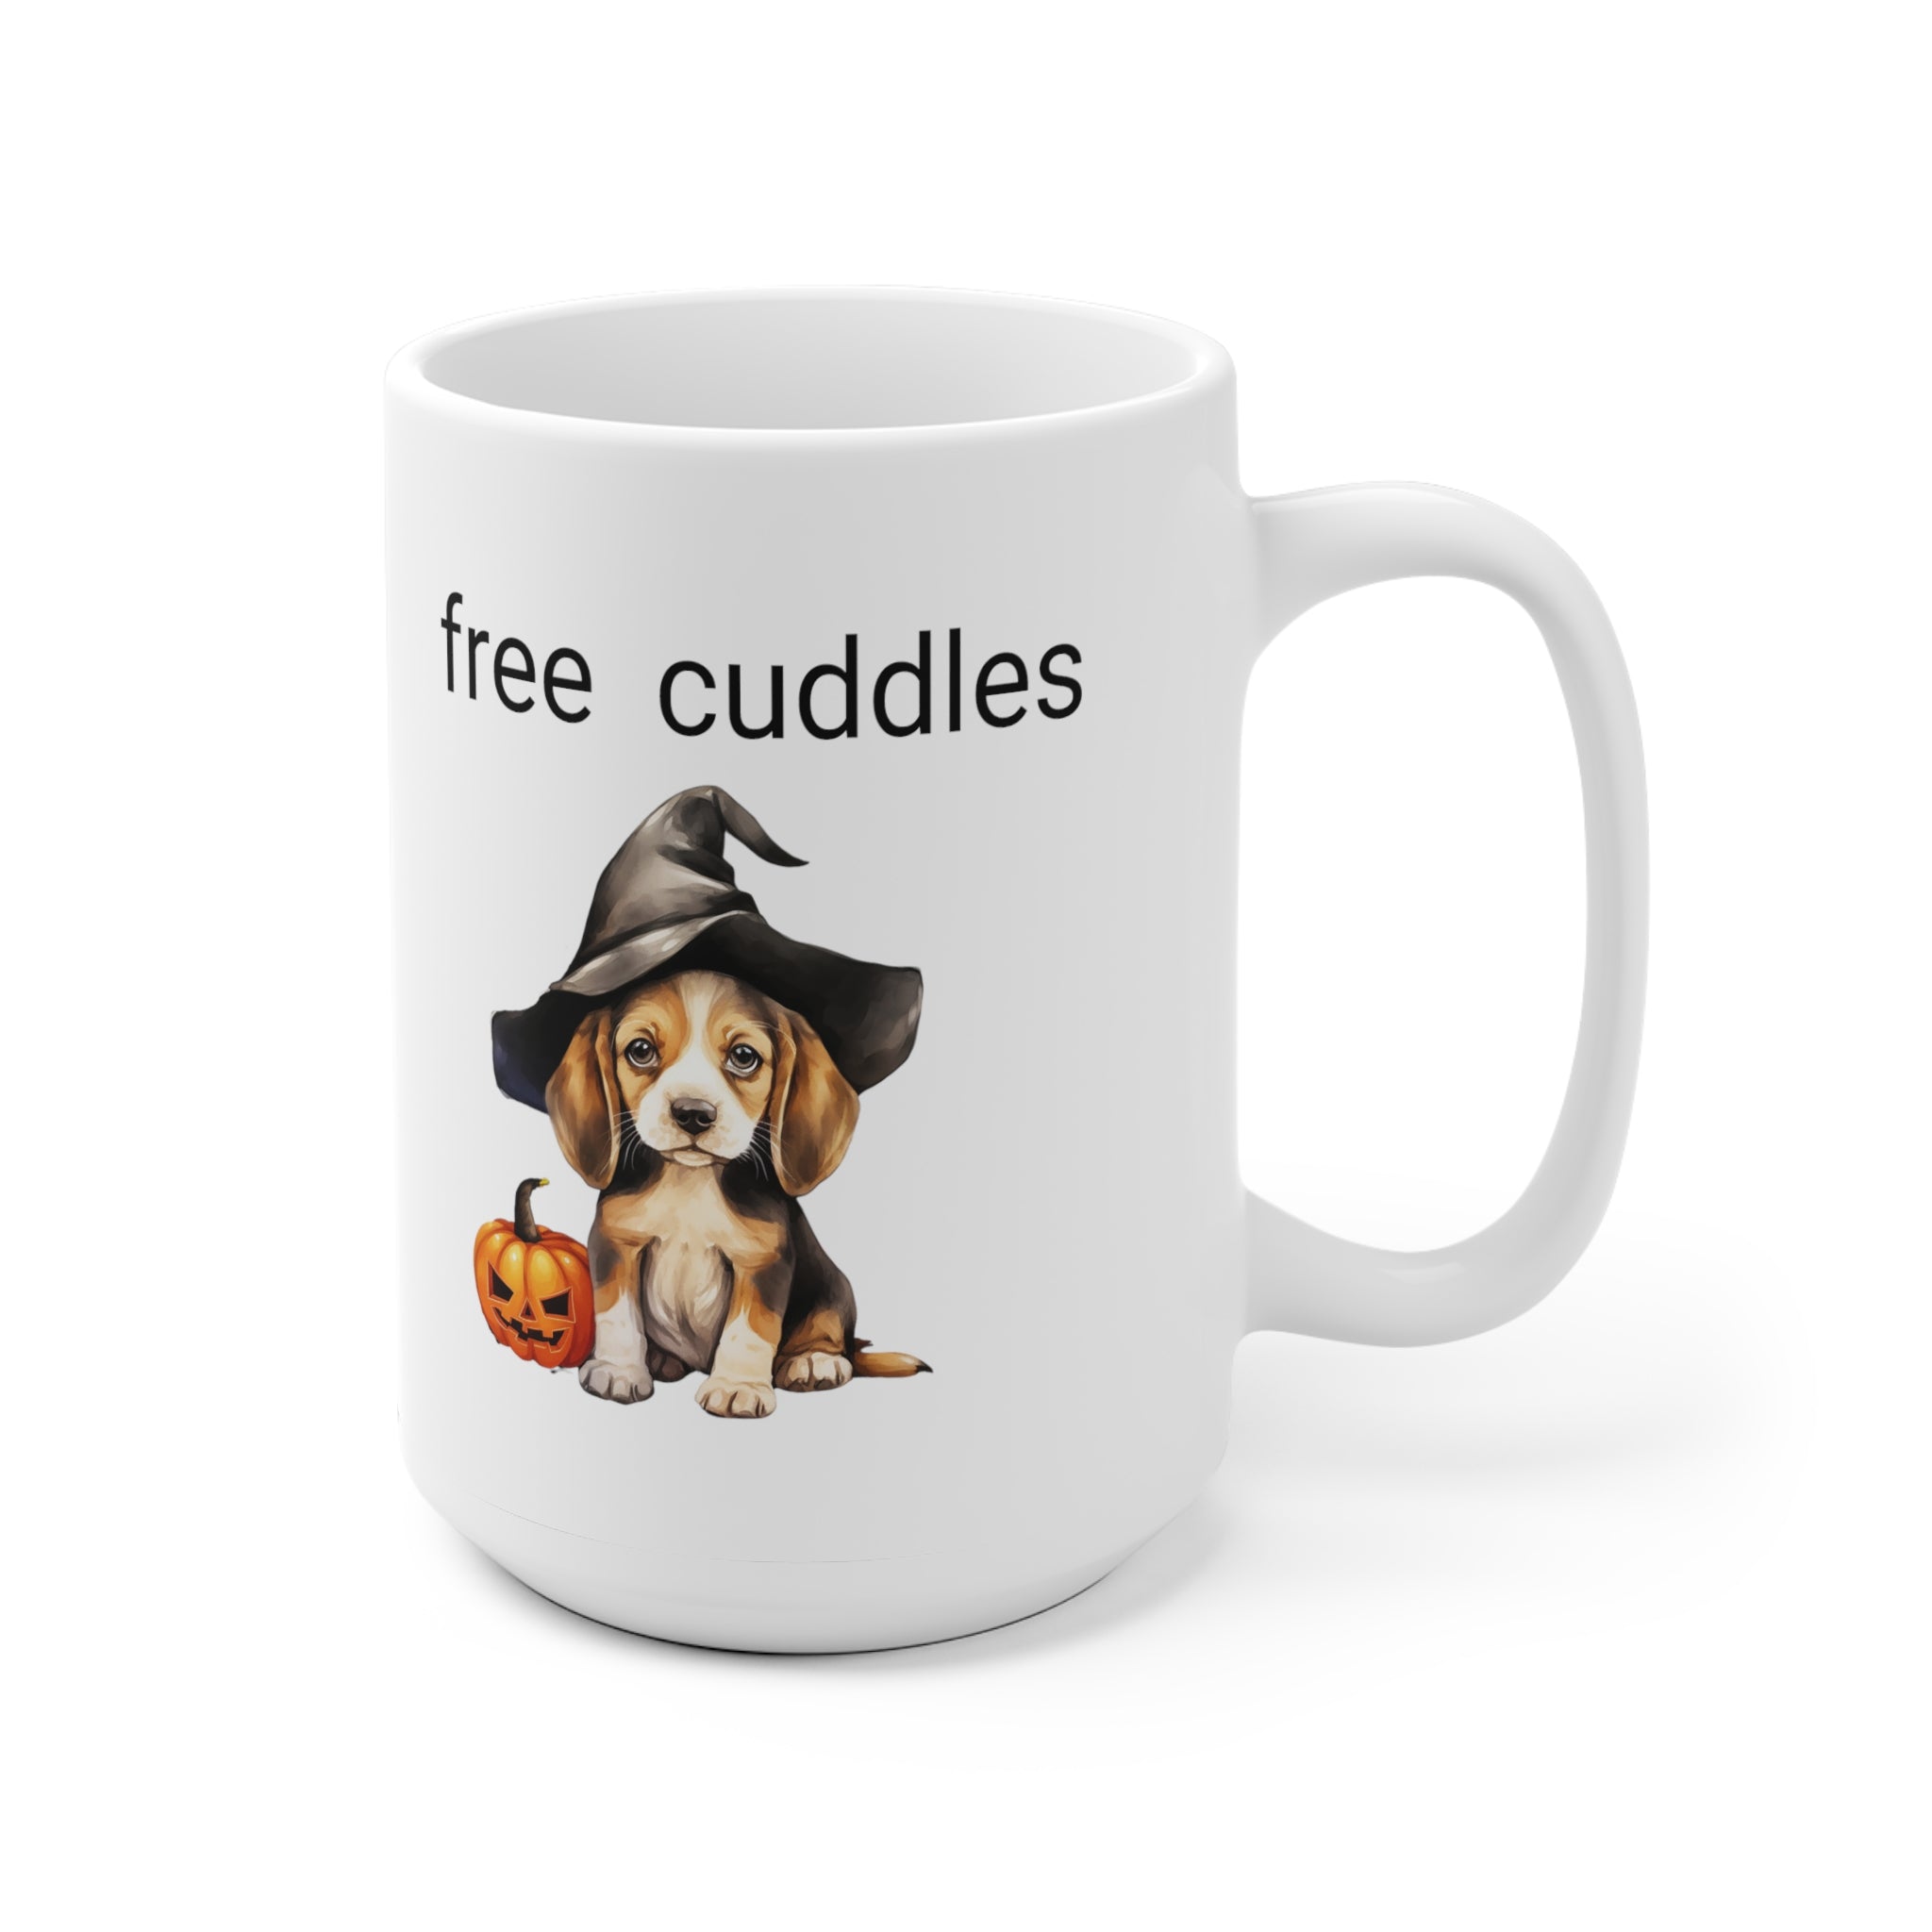 Halloween coffee mug puppy cute free cuddles in witch hat  gift and stocking stuffer White Ceramic Mug